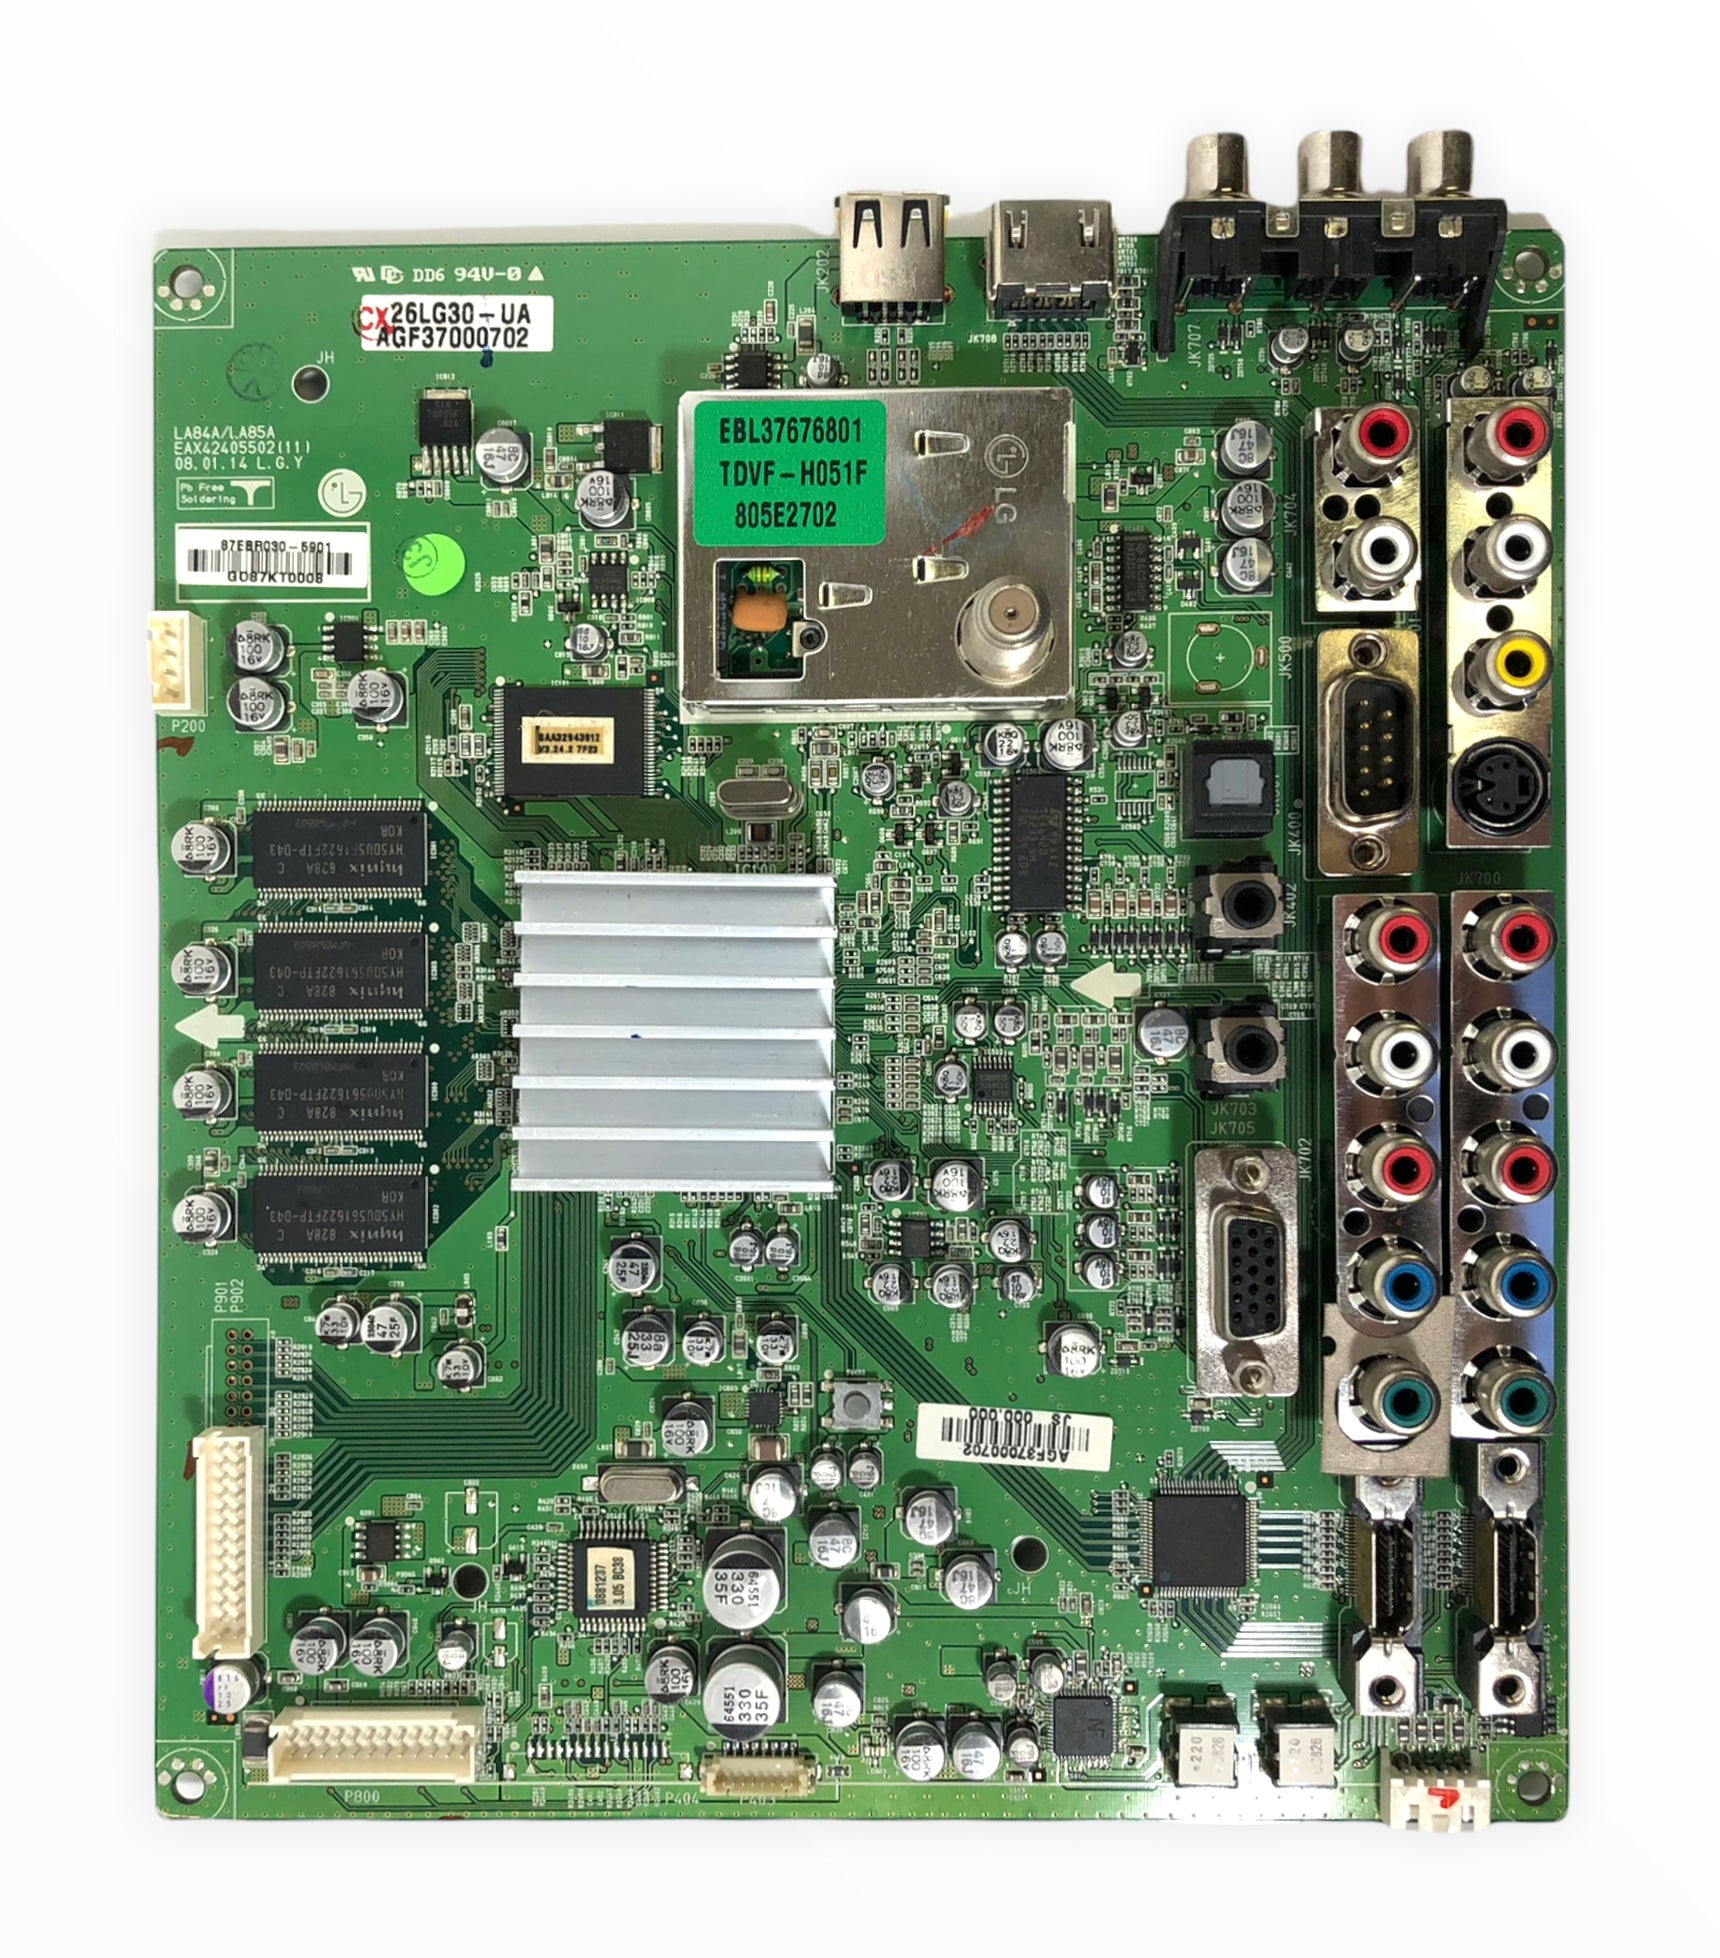 LG AGF37000702 (EAX42405502(11)) Main Board for 26LG30-UA